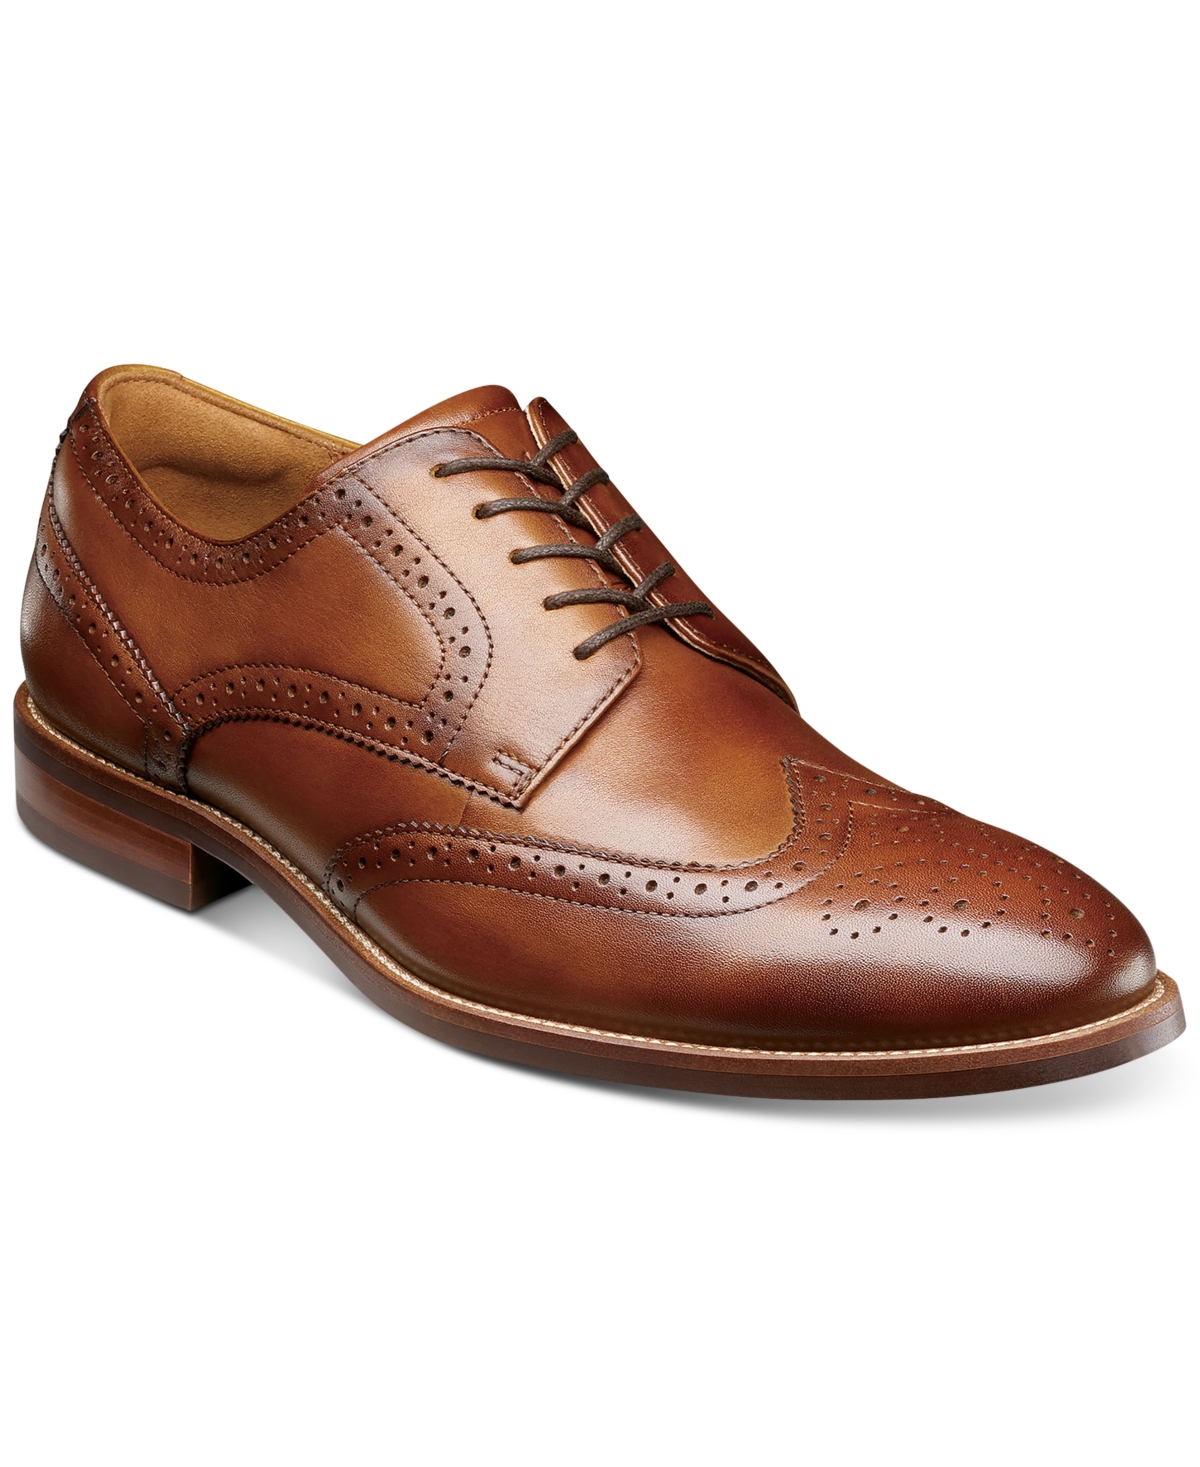 Men's Ruvo Wingtip Oxford Dress Shoes - Cognac